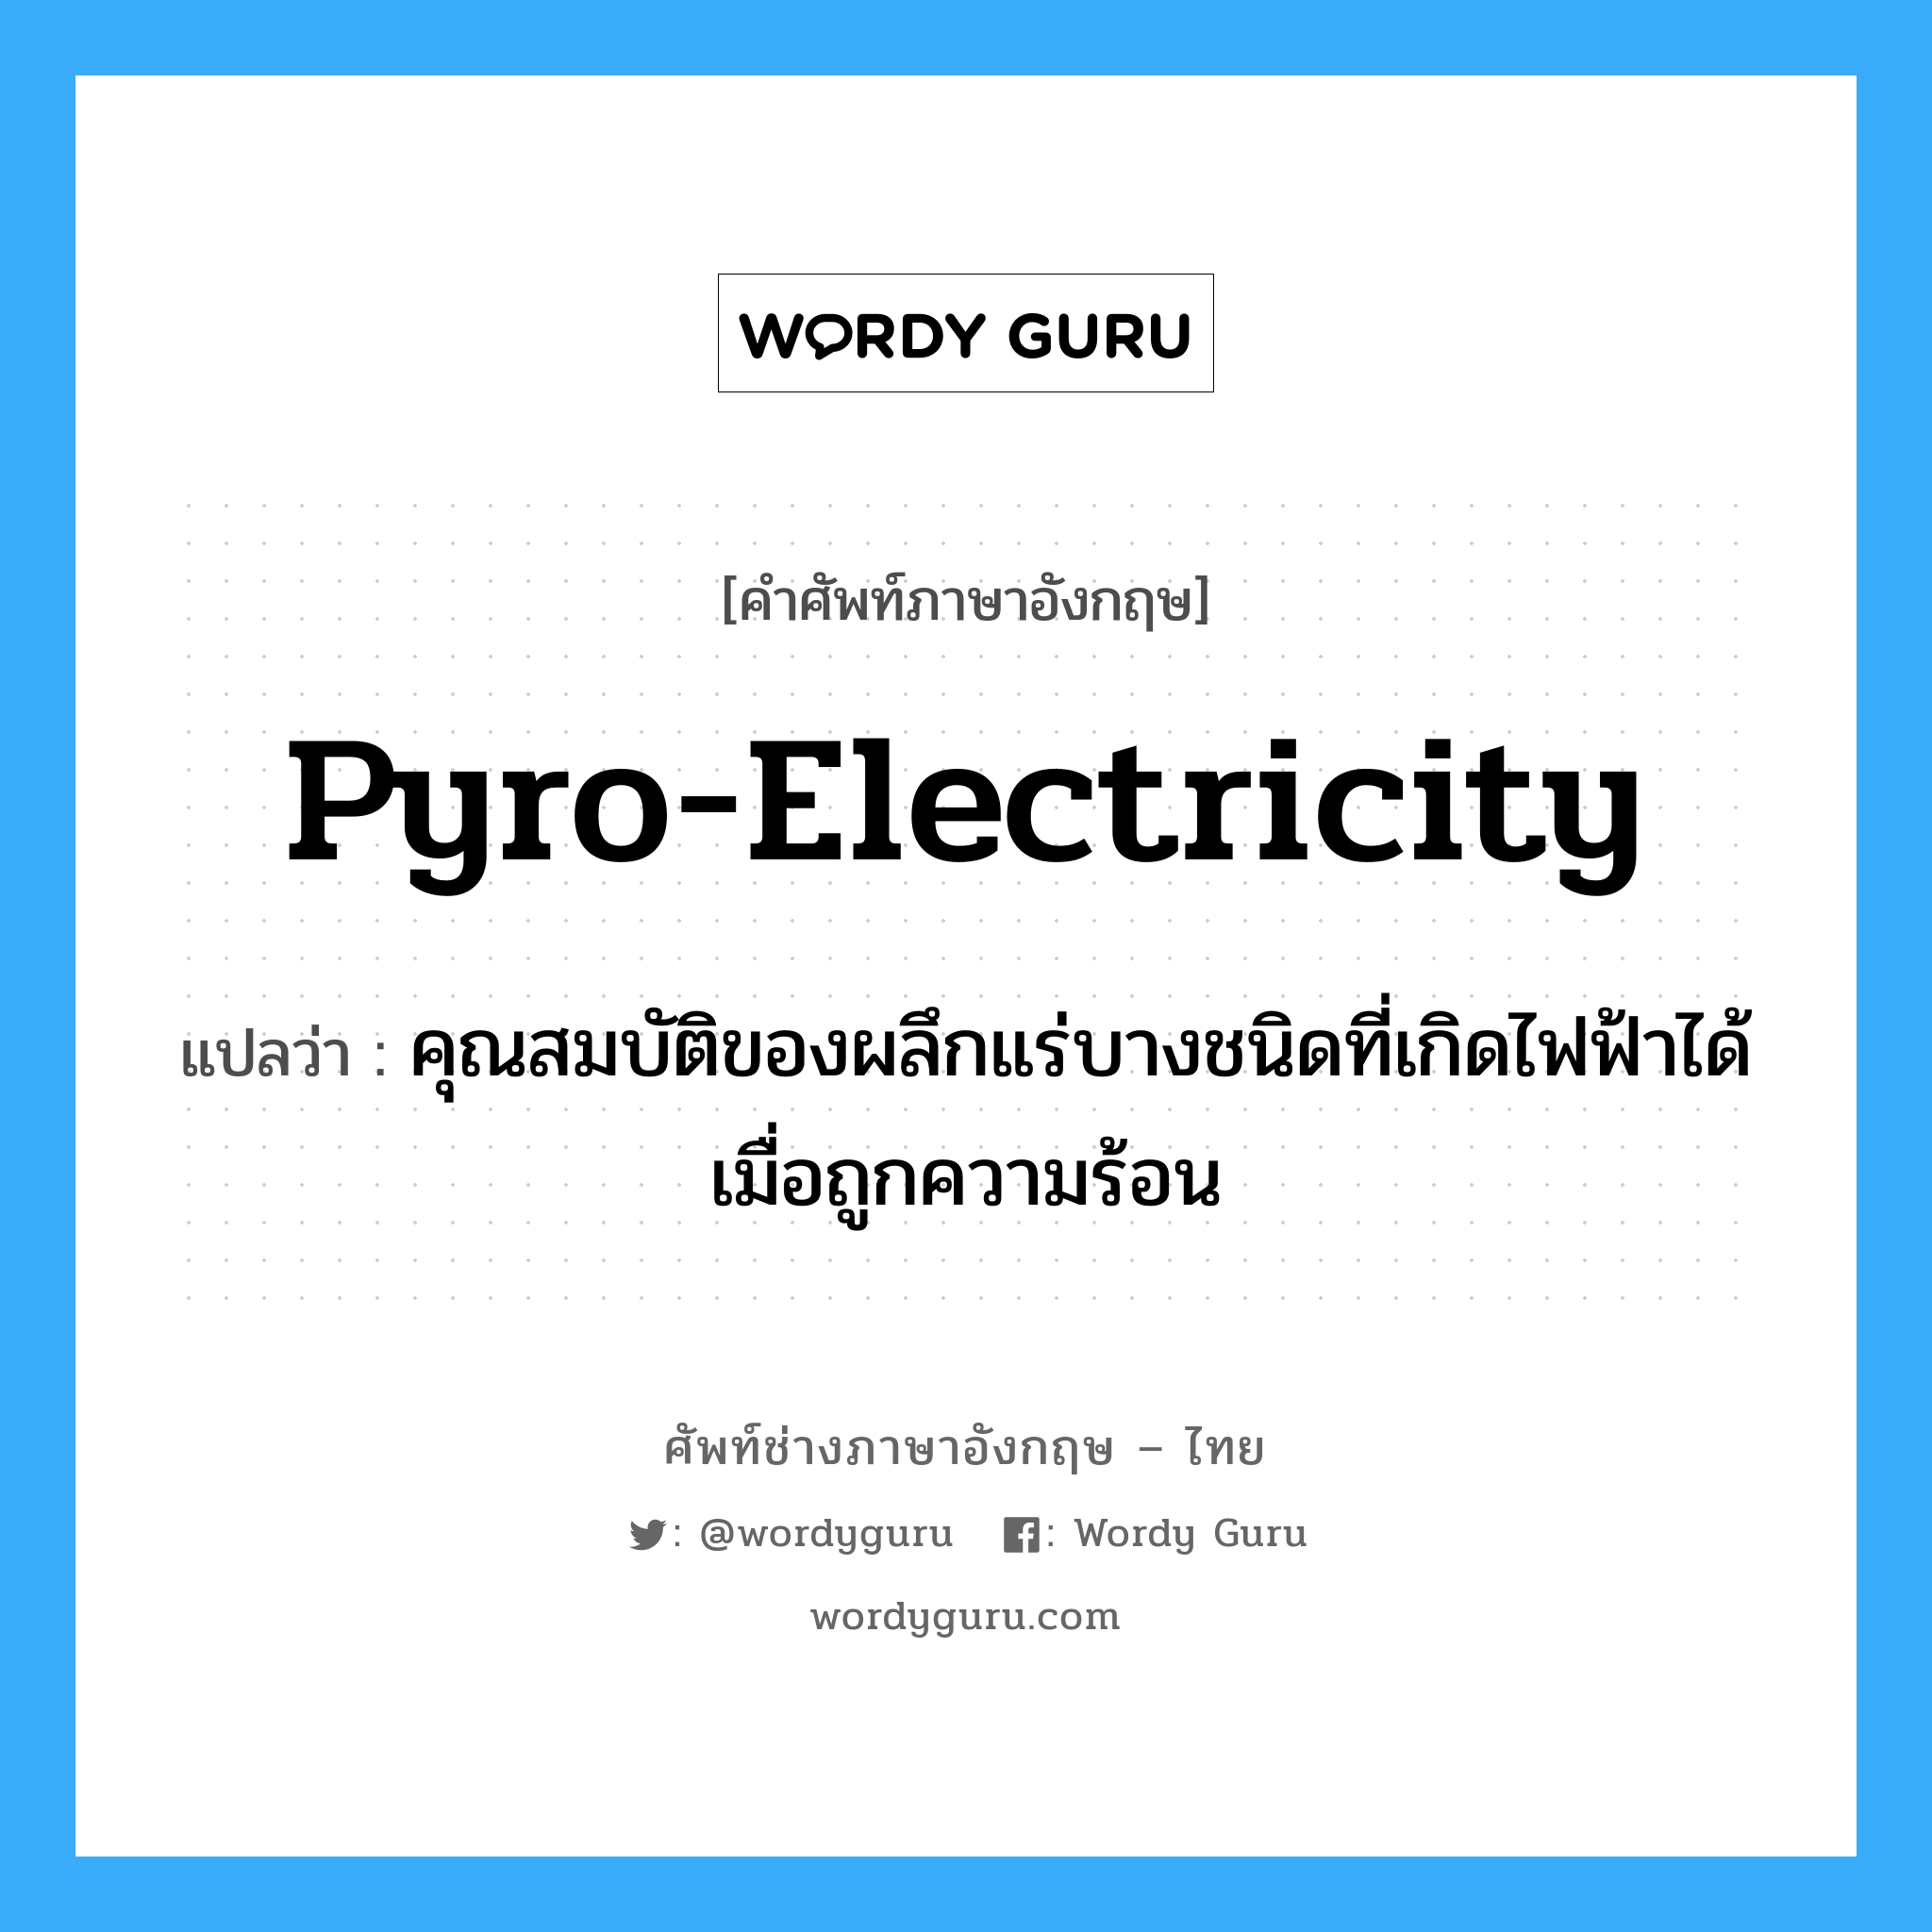 pyro-electricity แปลว่า?, คำศัพท์ช่างภาษาอังกฤษ - ไทย pyro-electricity คำศัพท์ภาษาอังกฤษ pyro-electricity แปลว่า คุณสมบัติของผลึกแร่บางชนิดที่เกิดไฟฟ้าได้ เมื่อถูกความร้อน